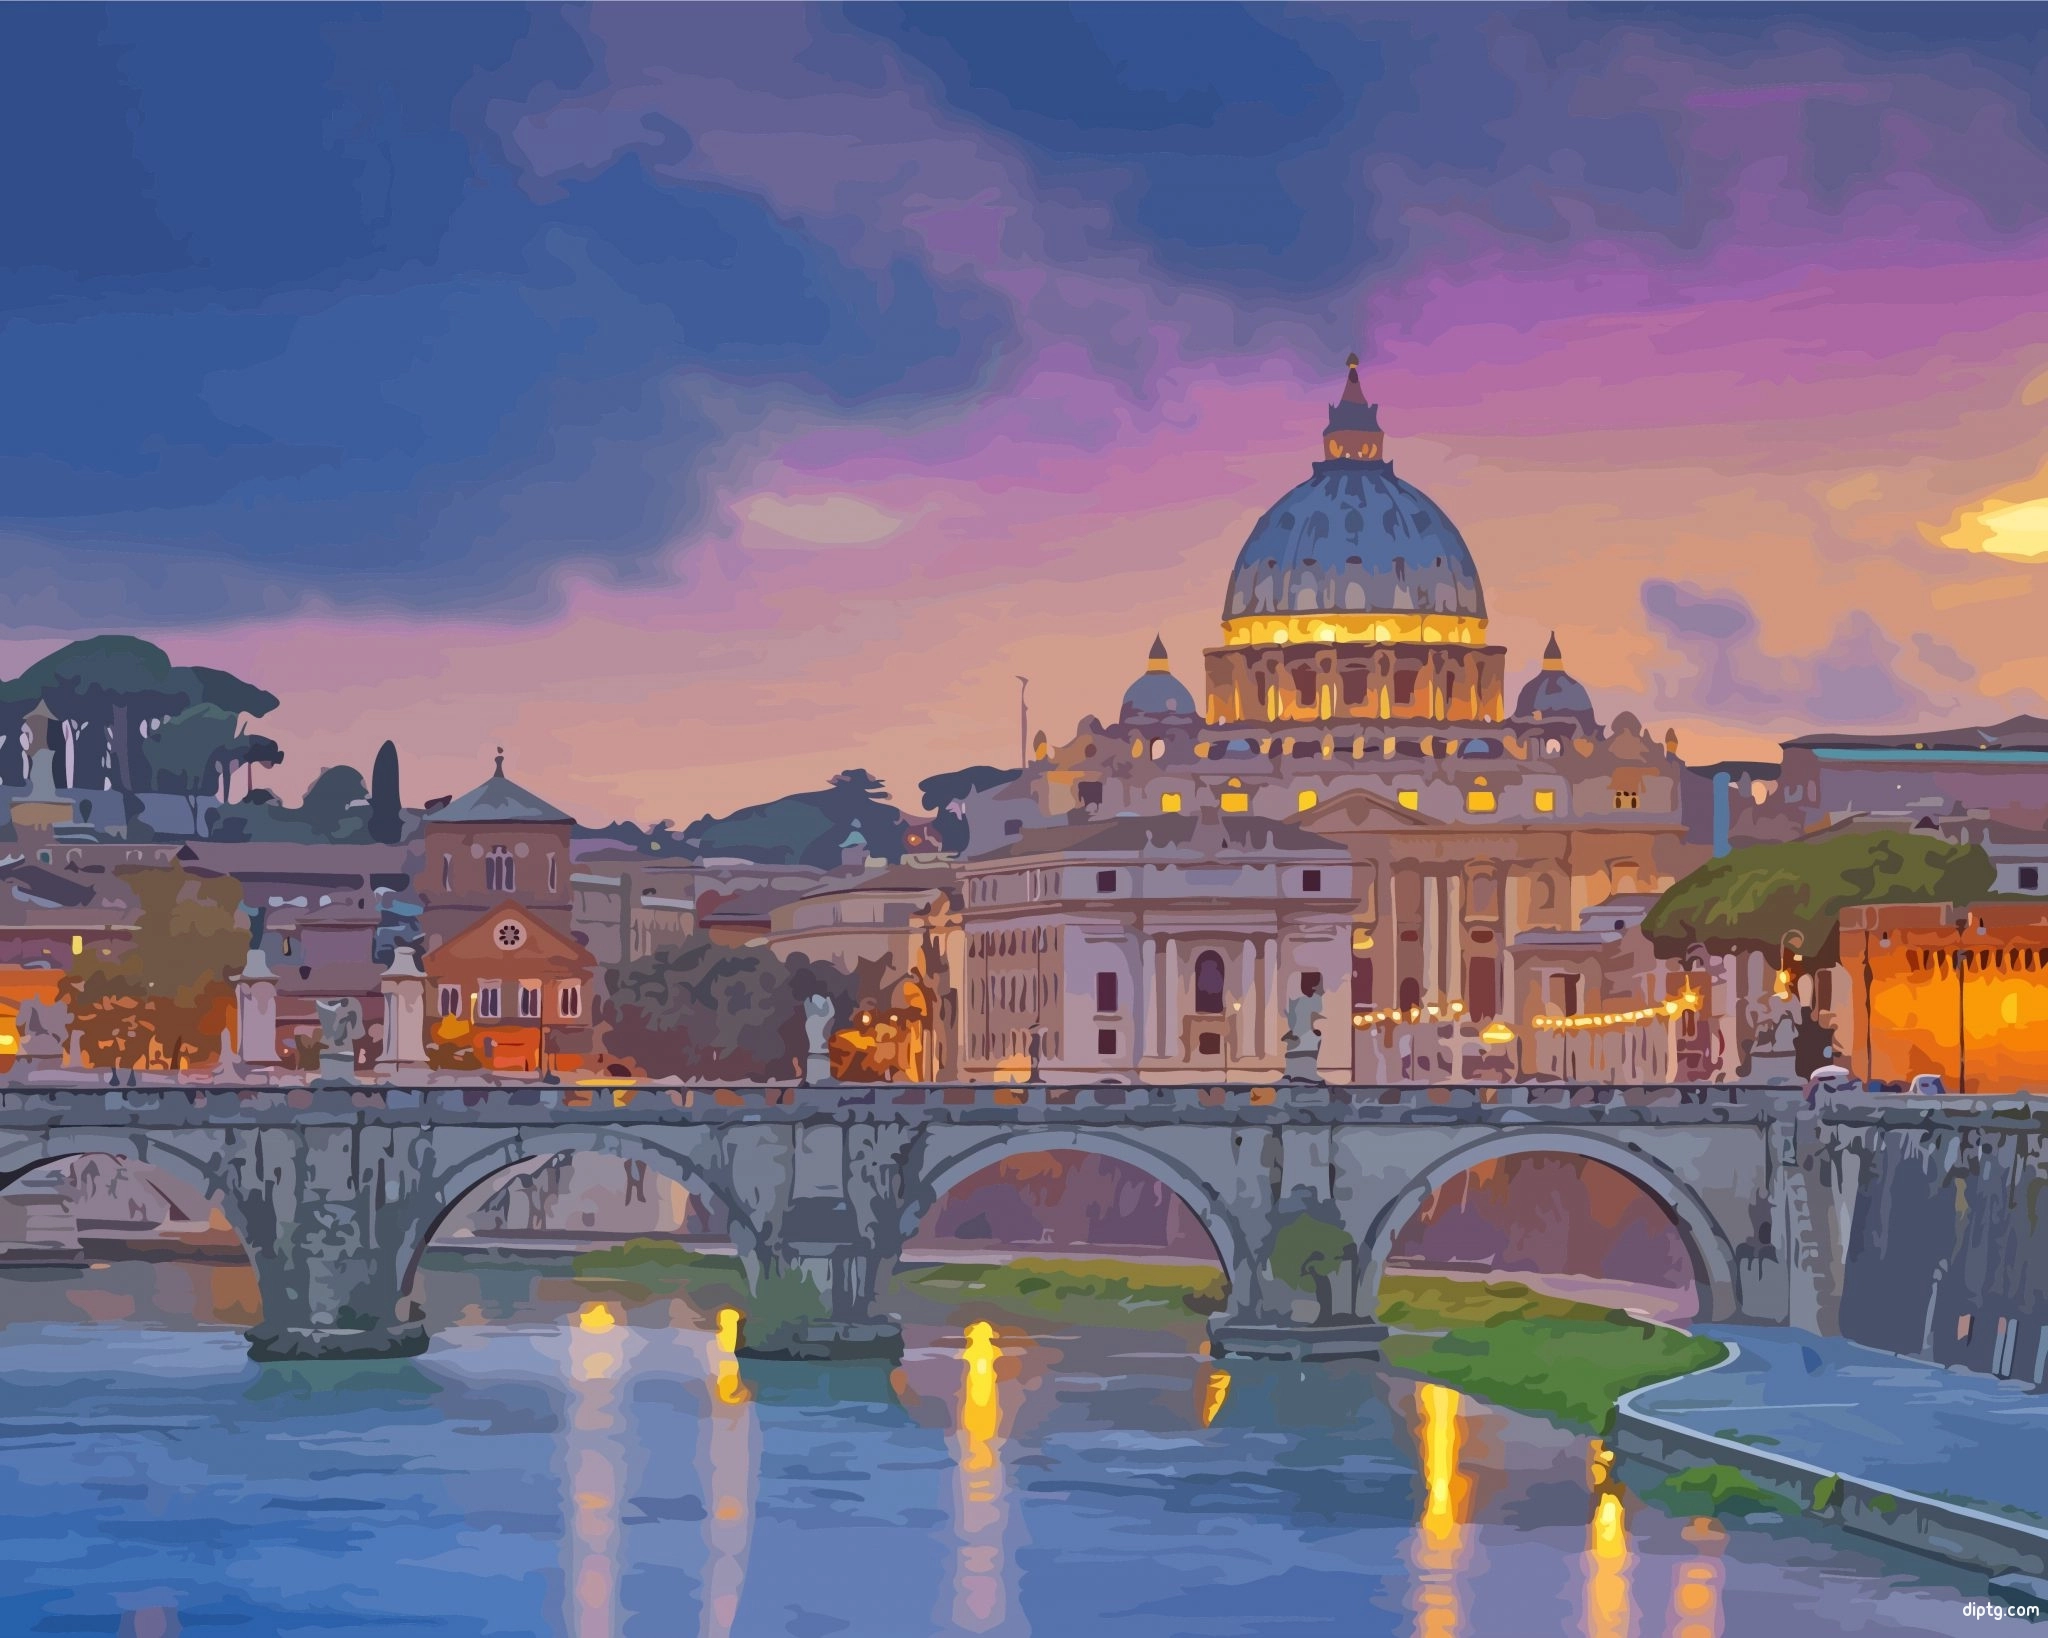 St Peters Basilica Vatican Painting By Numbers Kits.jpg